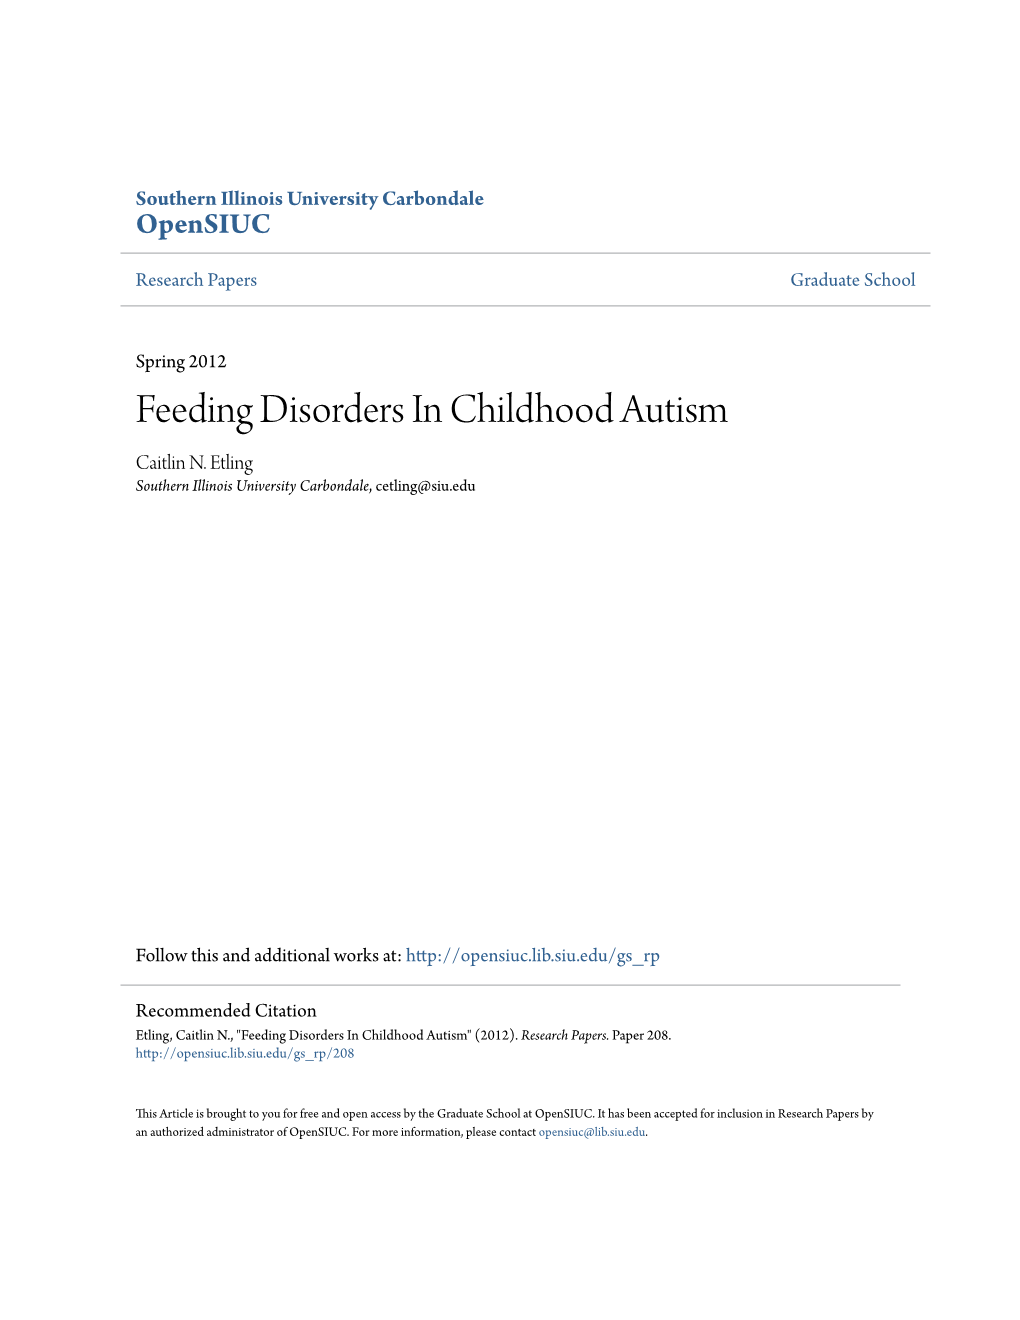 Feeding Disorders in Childhood Autism Caitlin N